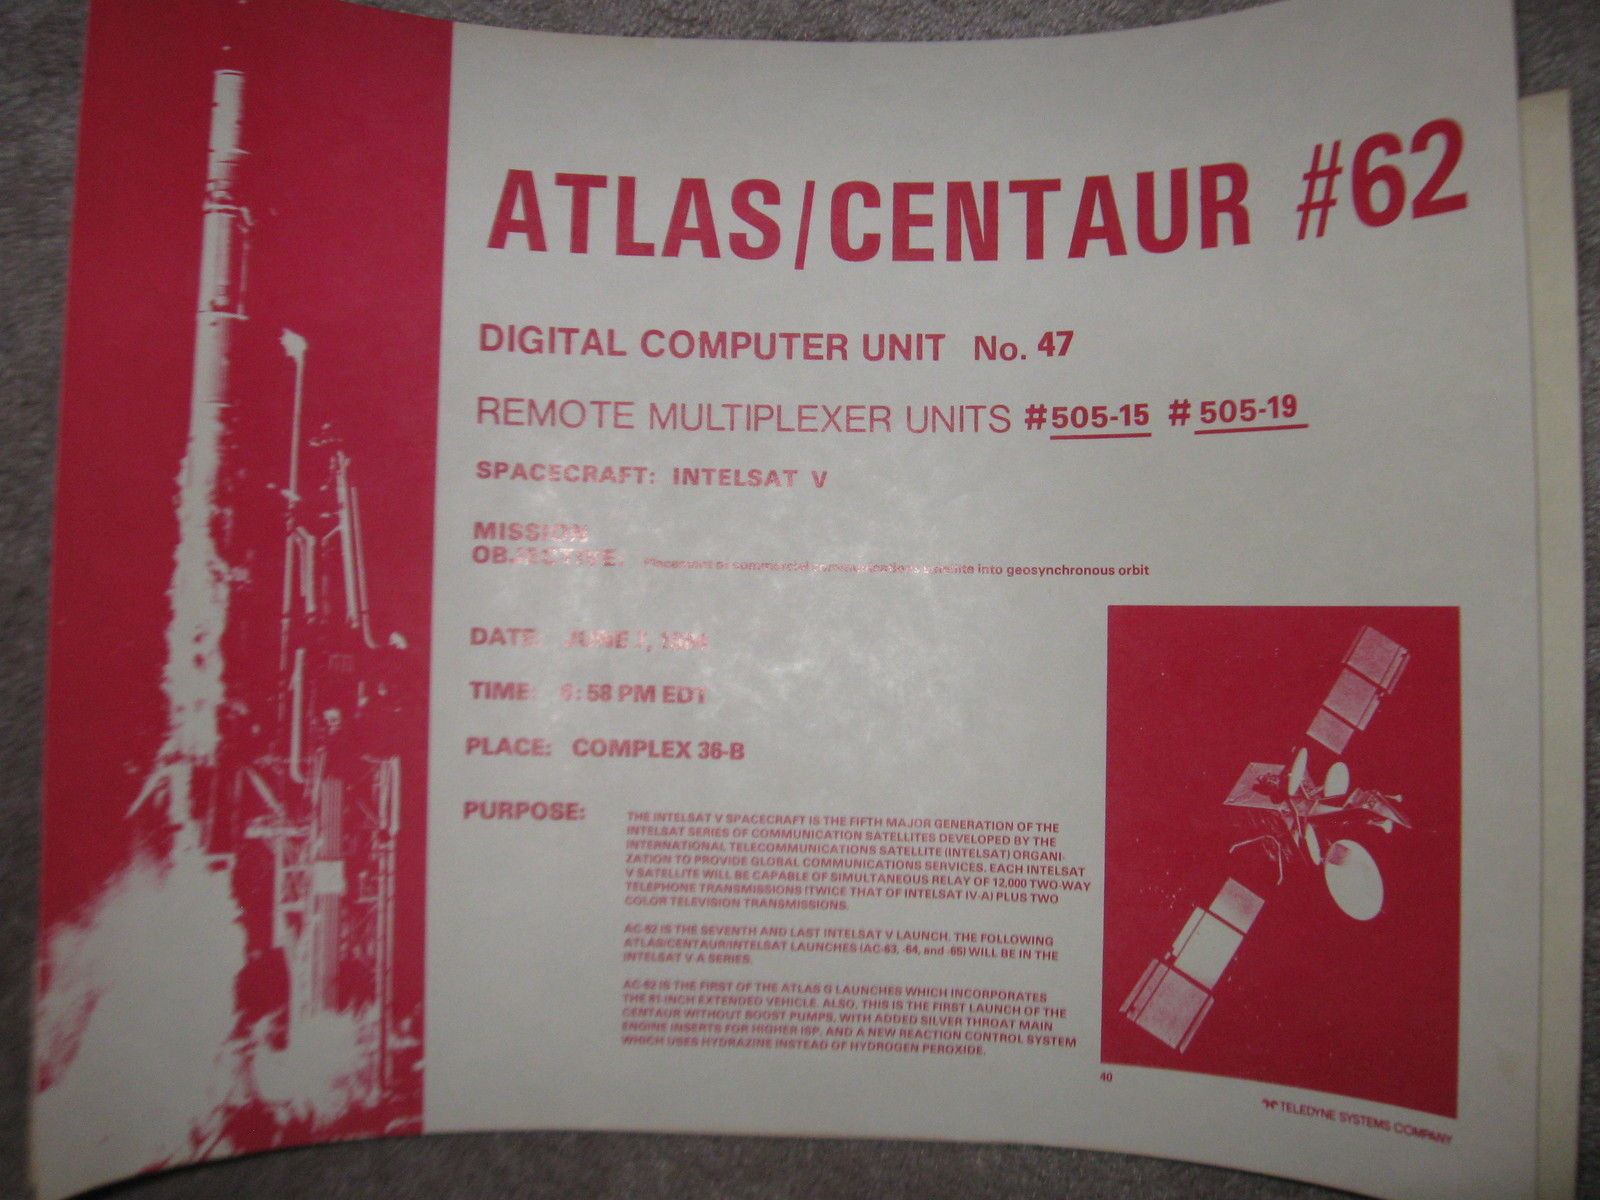 Atlas / Centaur #62 launch poster